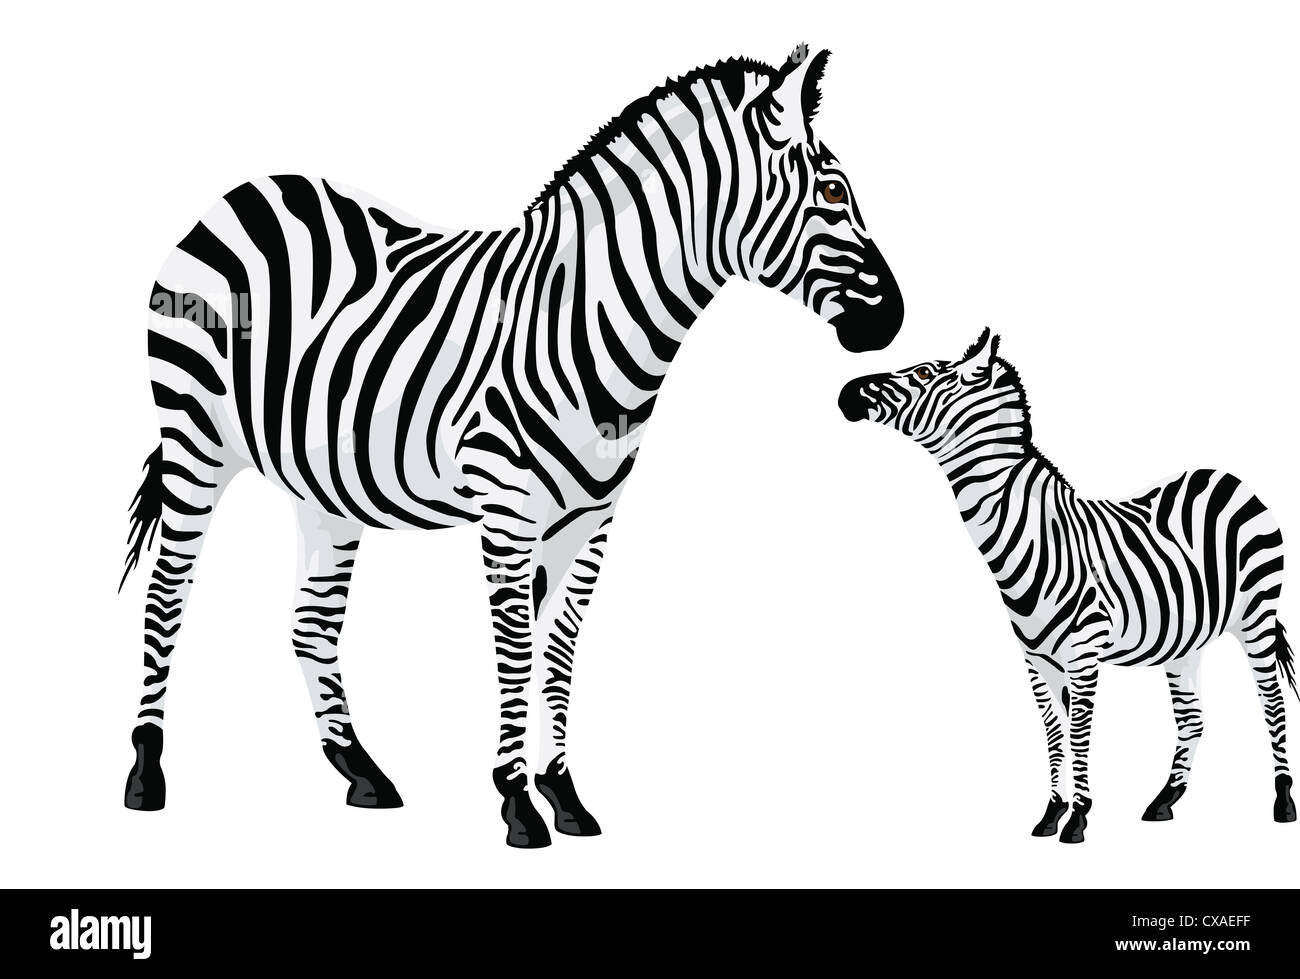 Zebra or Equus zebra, vector illustration Stock Photo